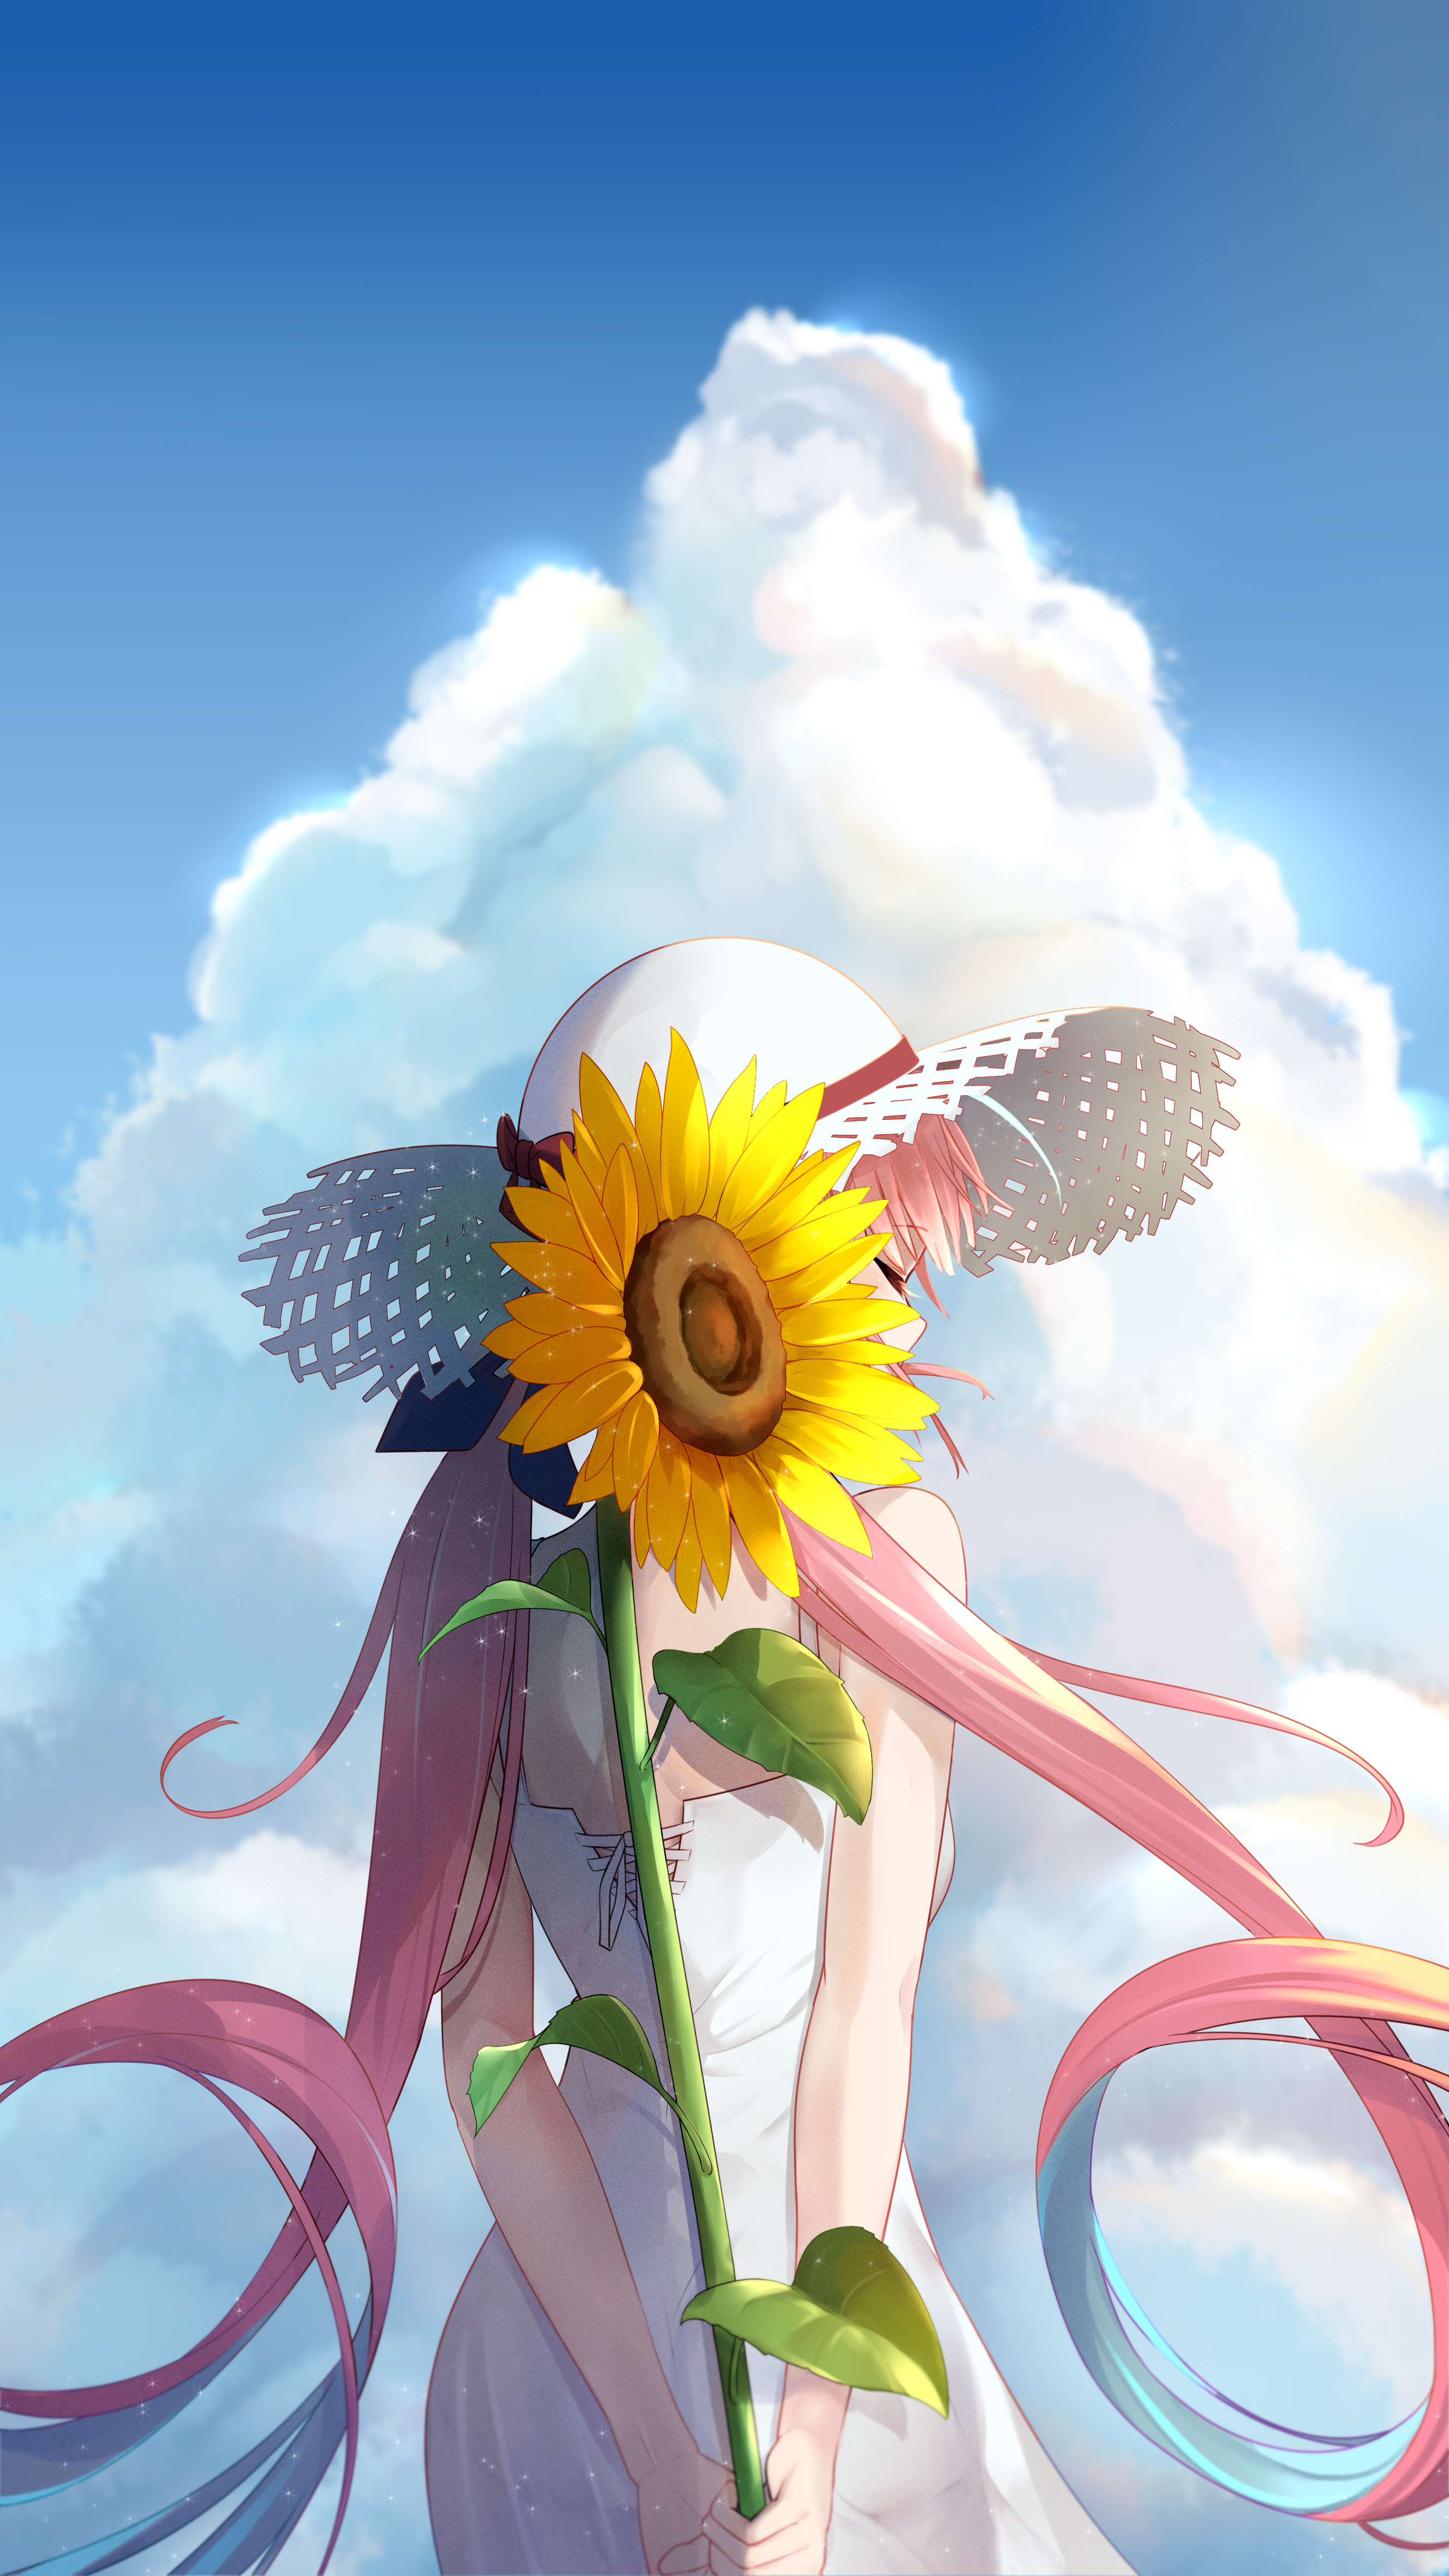 Anime 2655x4720 anime anime girls digital art artwork 2D portrait display Yao Unripe Hololive Virtual Youtuber Minato Aqua sunflowers hat dress sun dress pink hair twintails